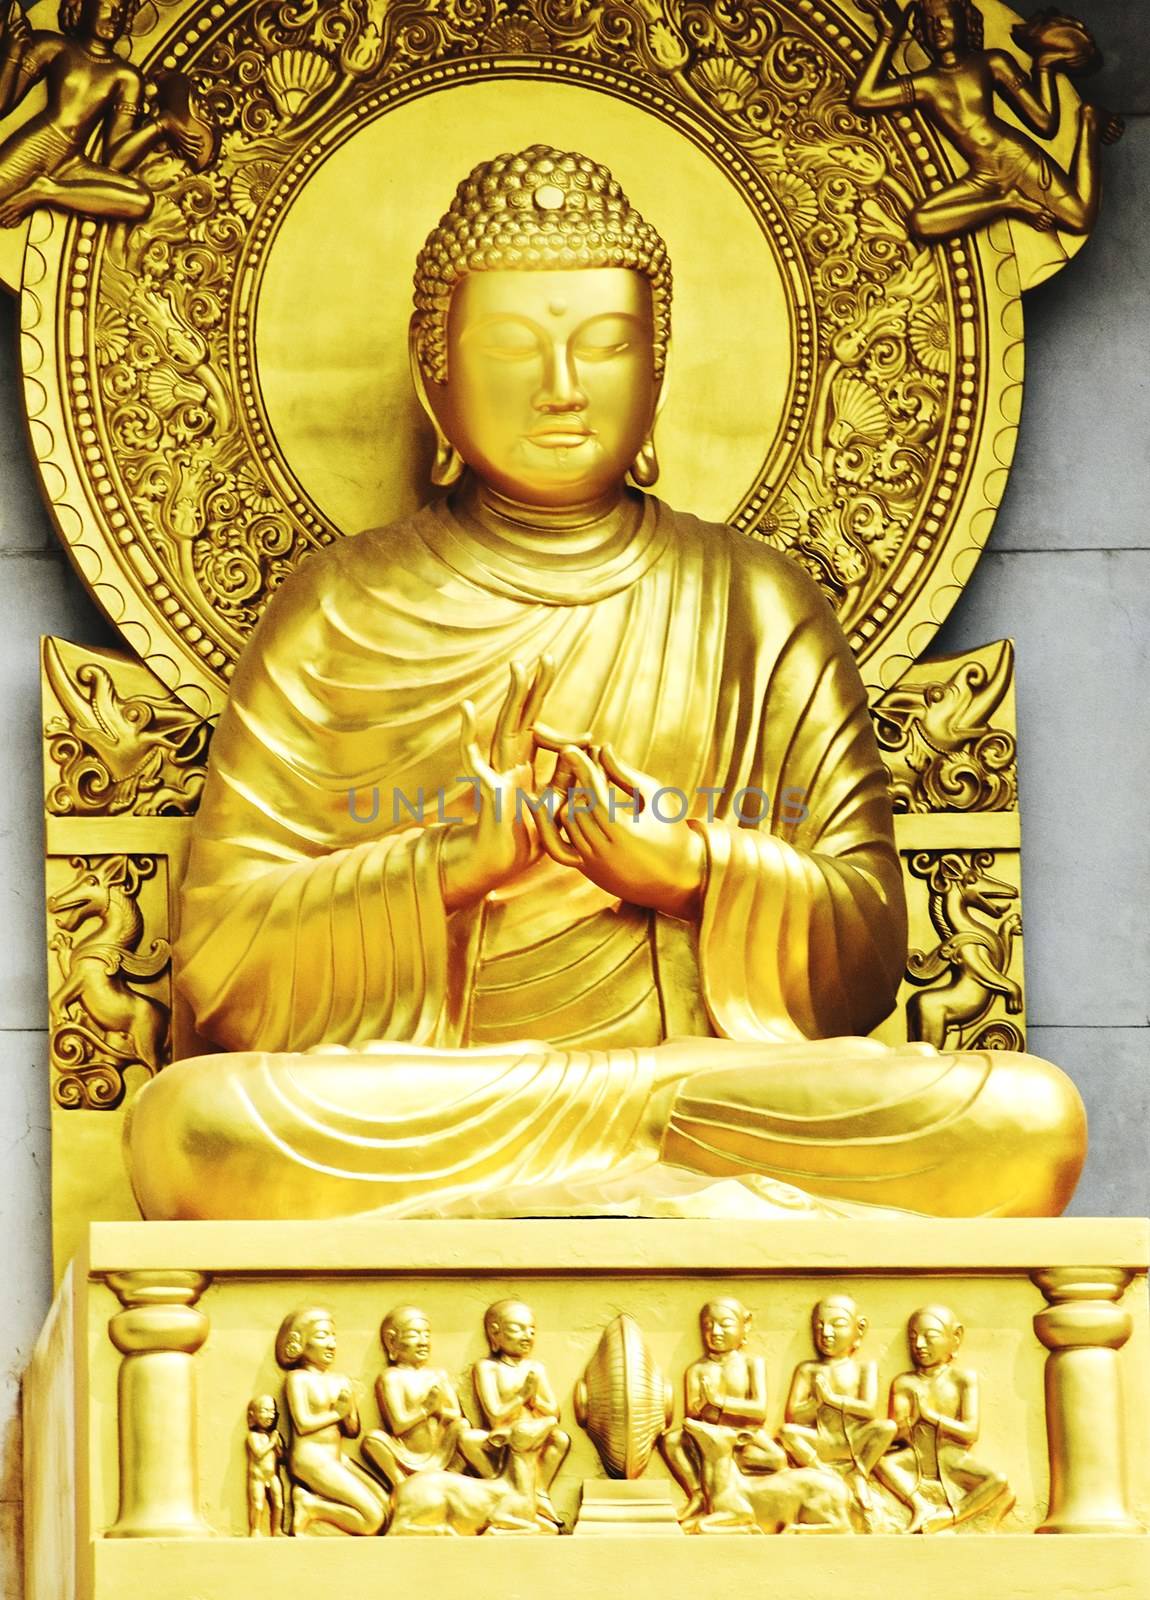 Buddha - Worshiper of non-violence